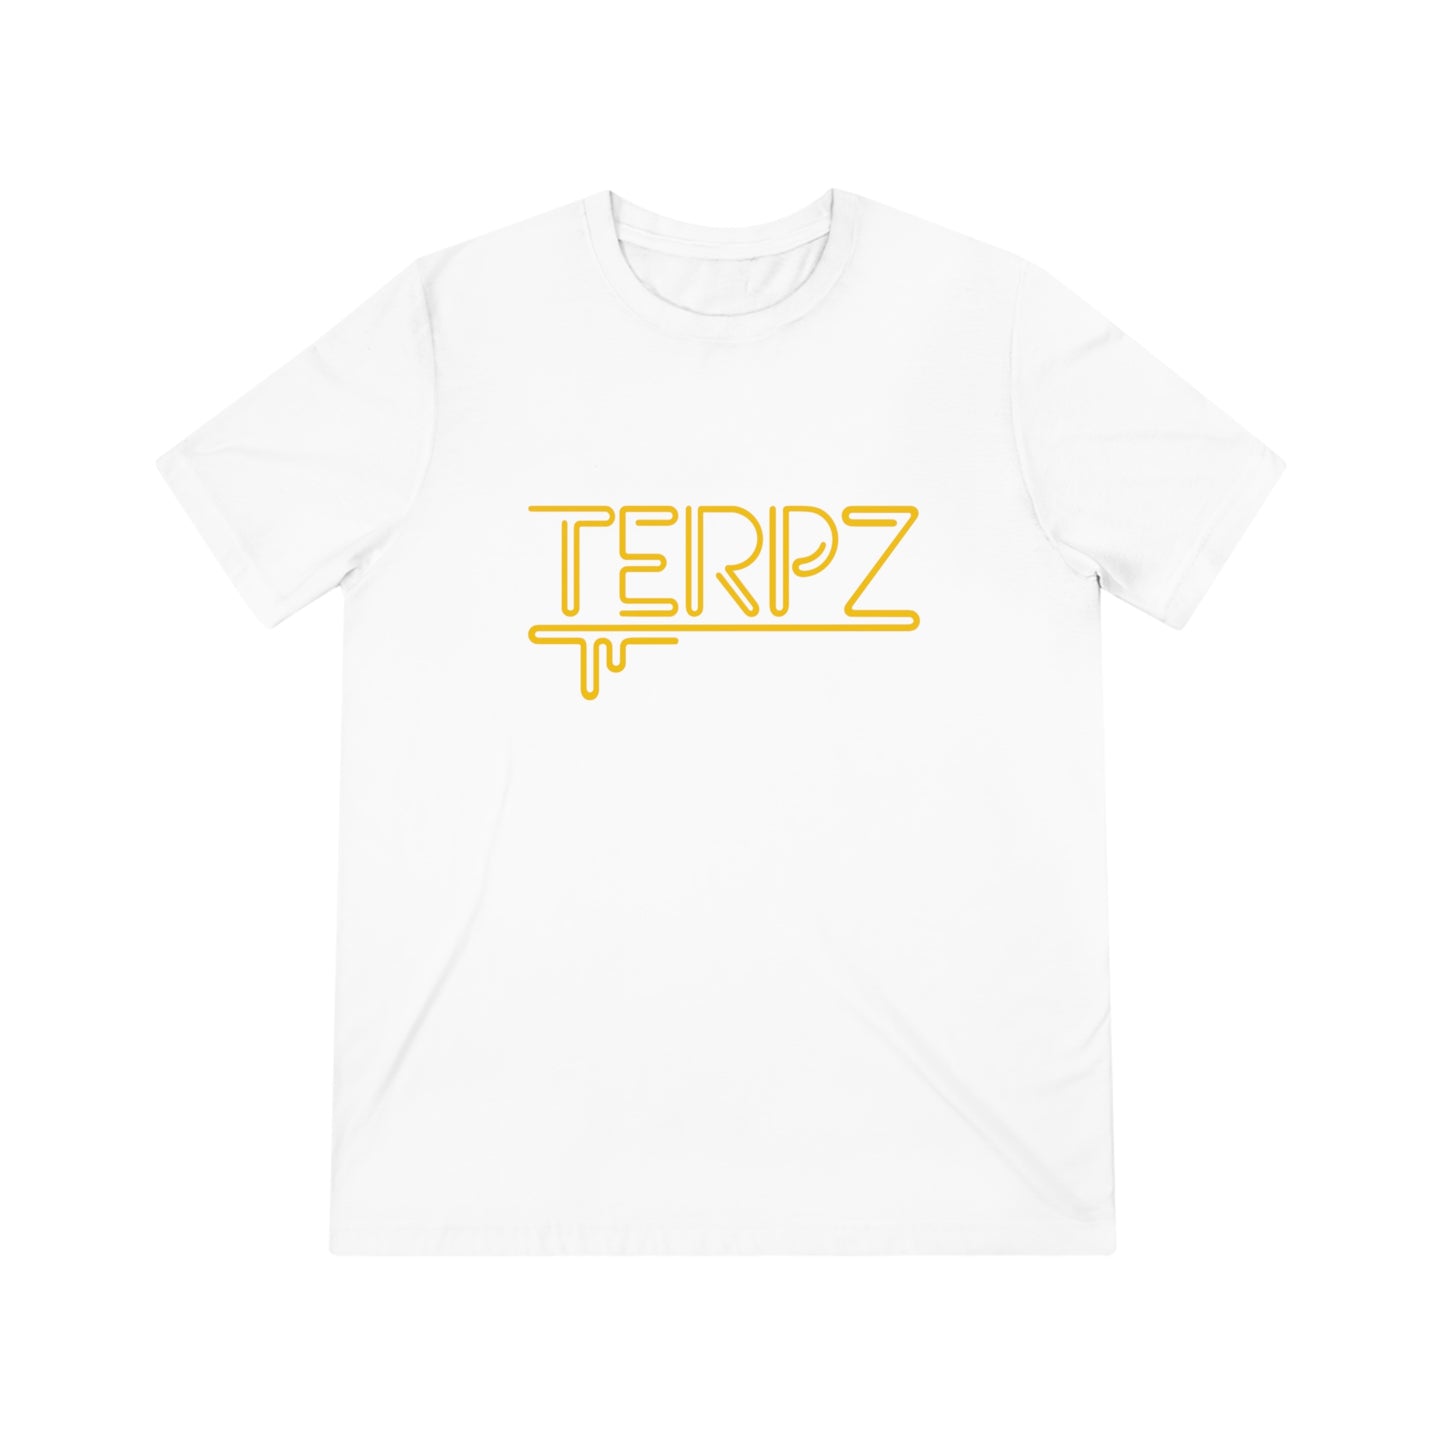 Terpz - T-Shirt